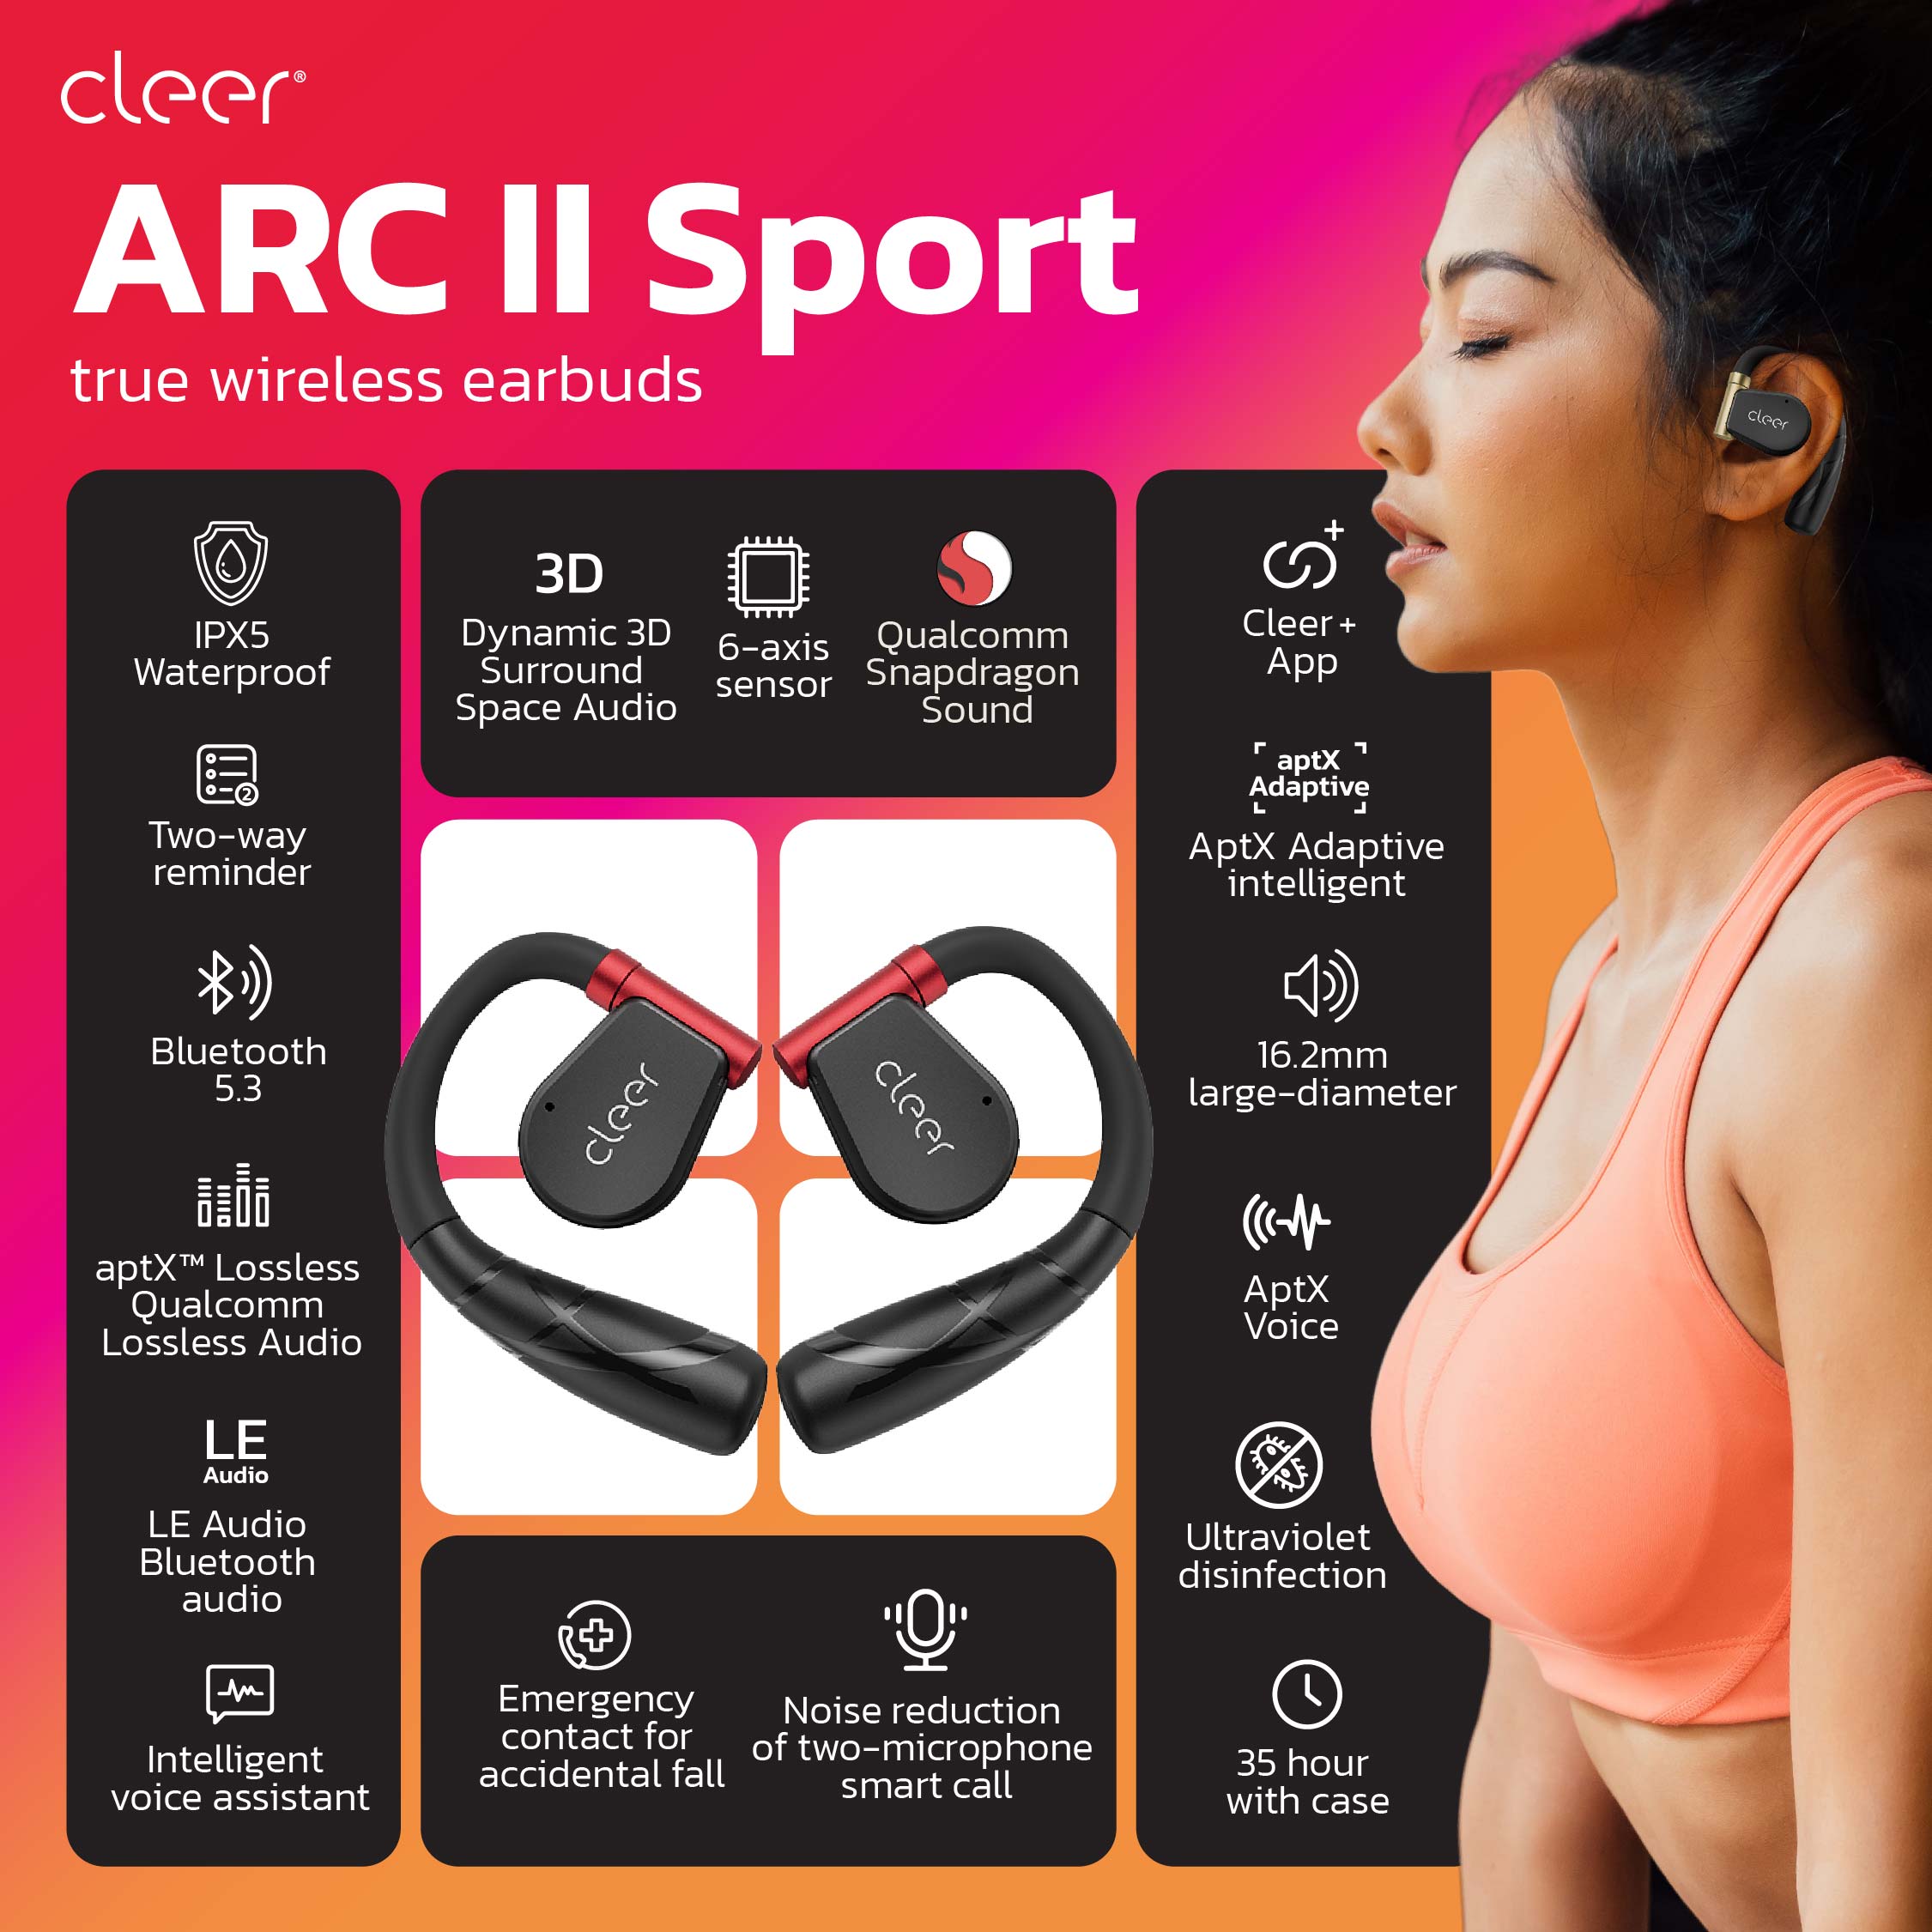 1.Pic Cleer Audio ARC II SPORT 01 | ARC II MUSIC | RTB เปิดตัวหูฟัง 2 รุ่น “ARC II MUSIC” และ “ARC II SPORT” จากแบรนด์ Cleer ด้วยดีไซน์มาแรงแบบ Open Ear